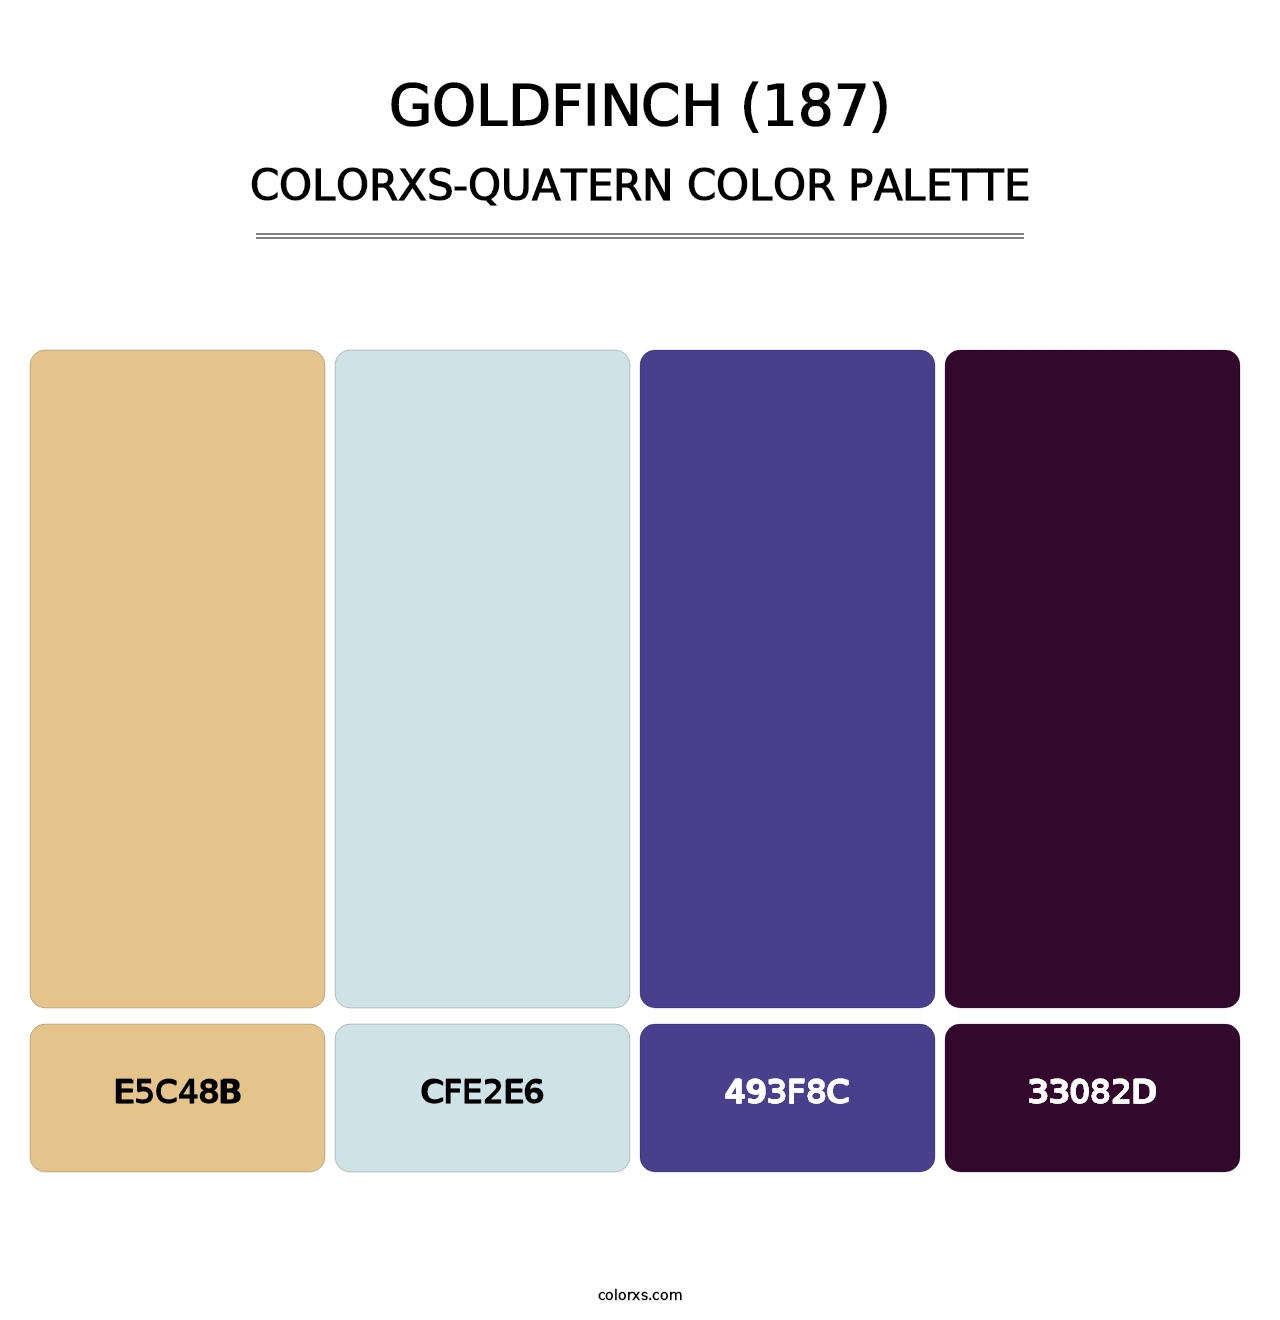 Goldfinch (187) - Colorxs Quatern Palette